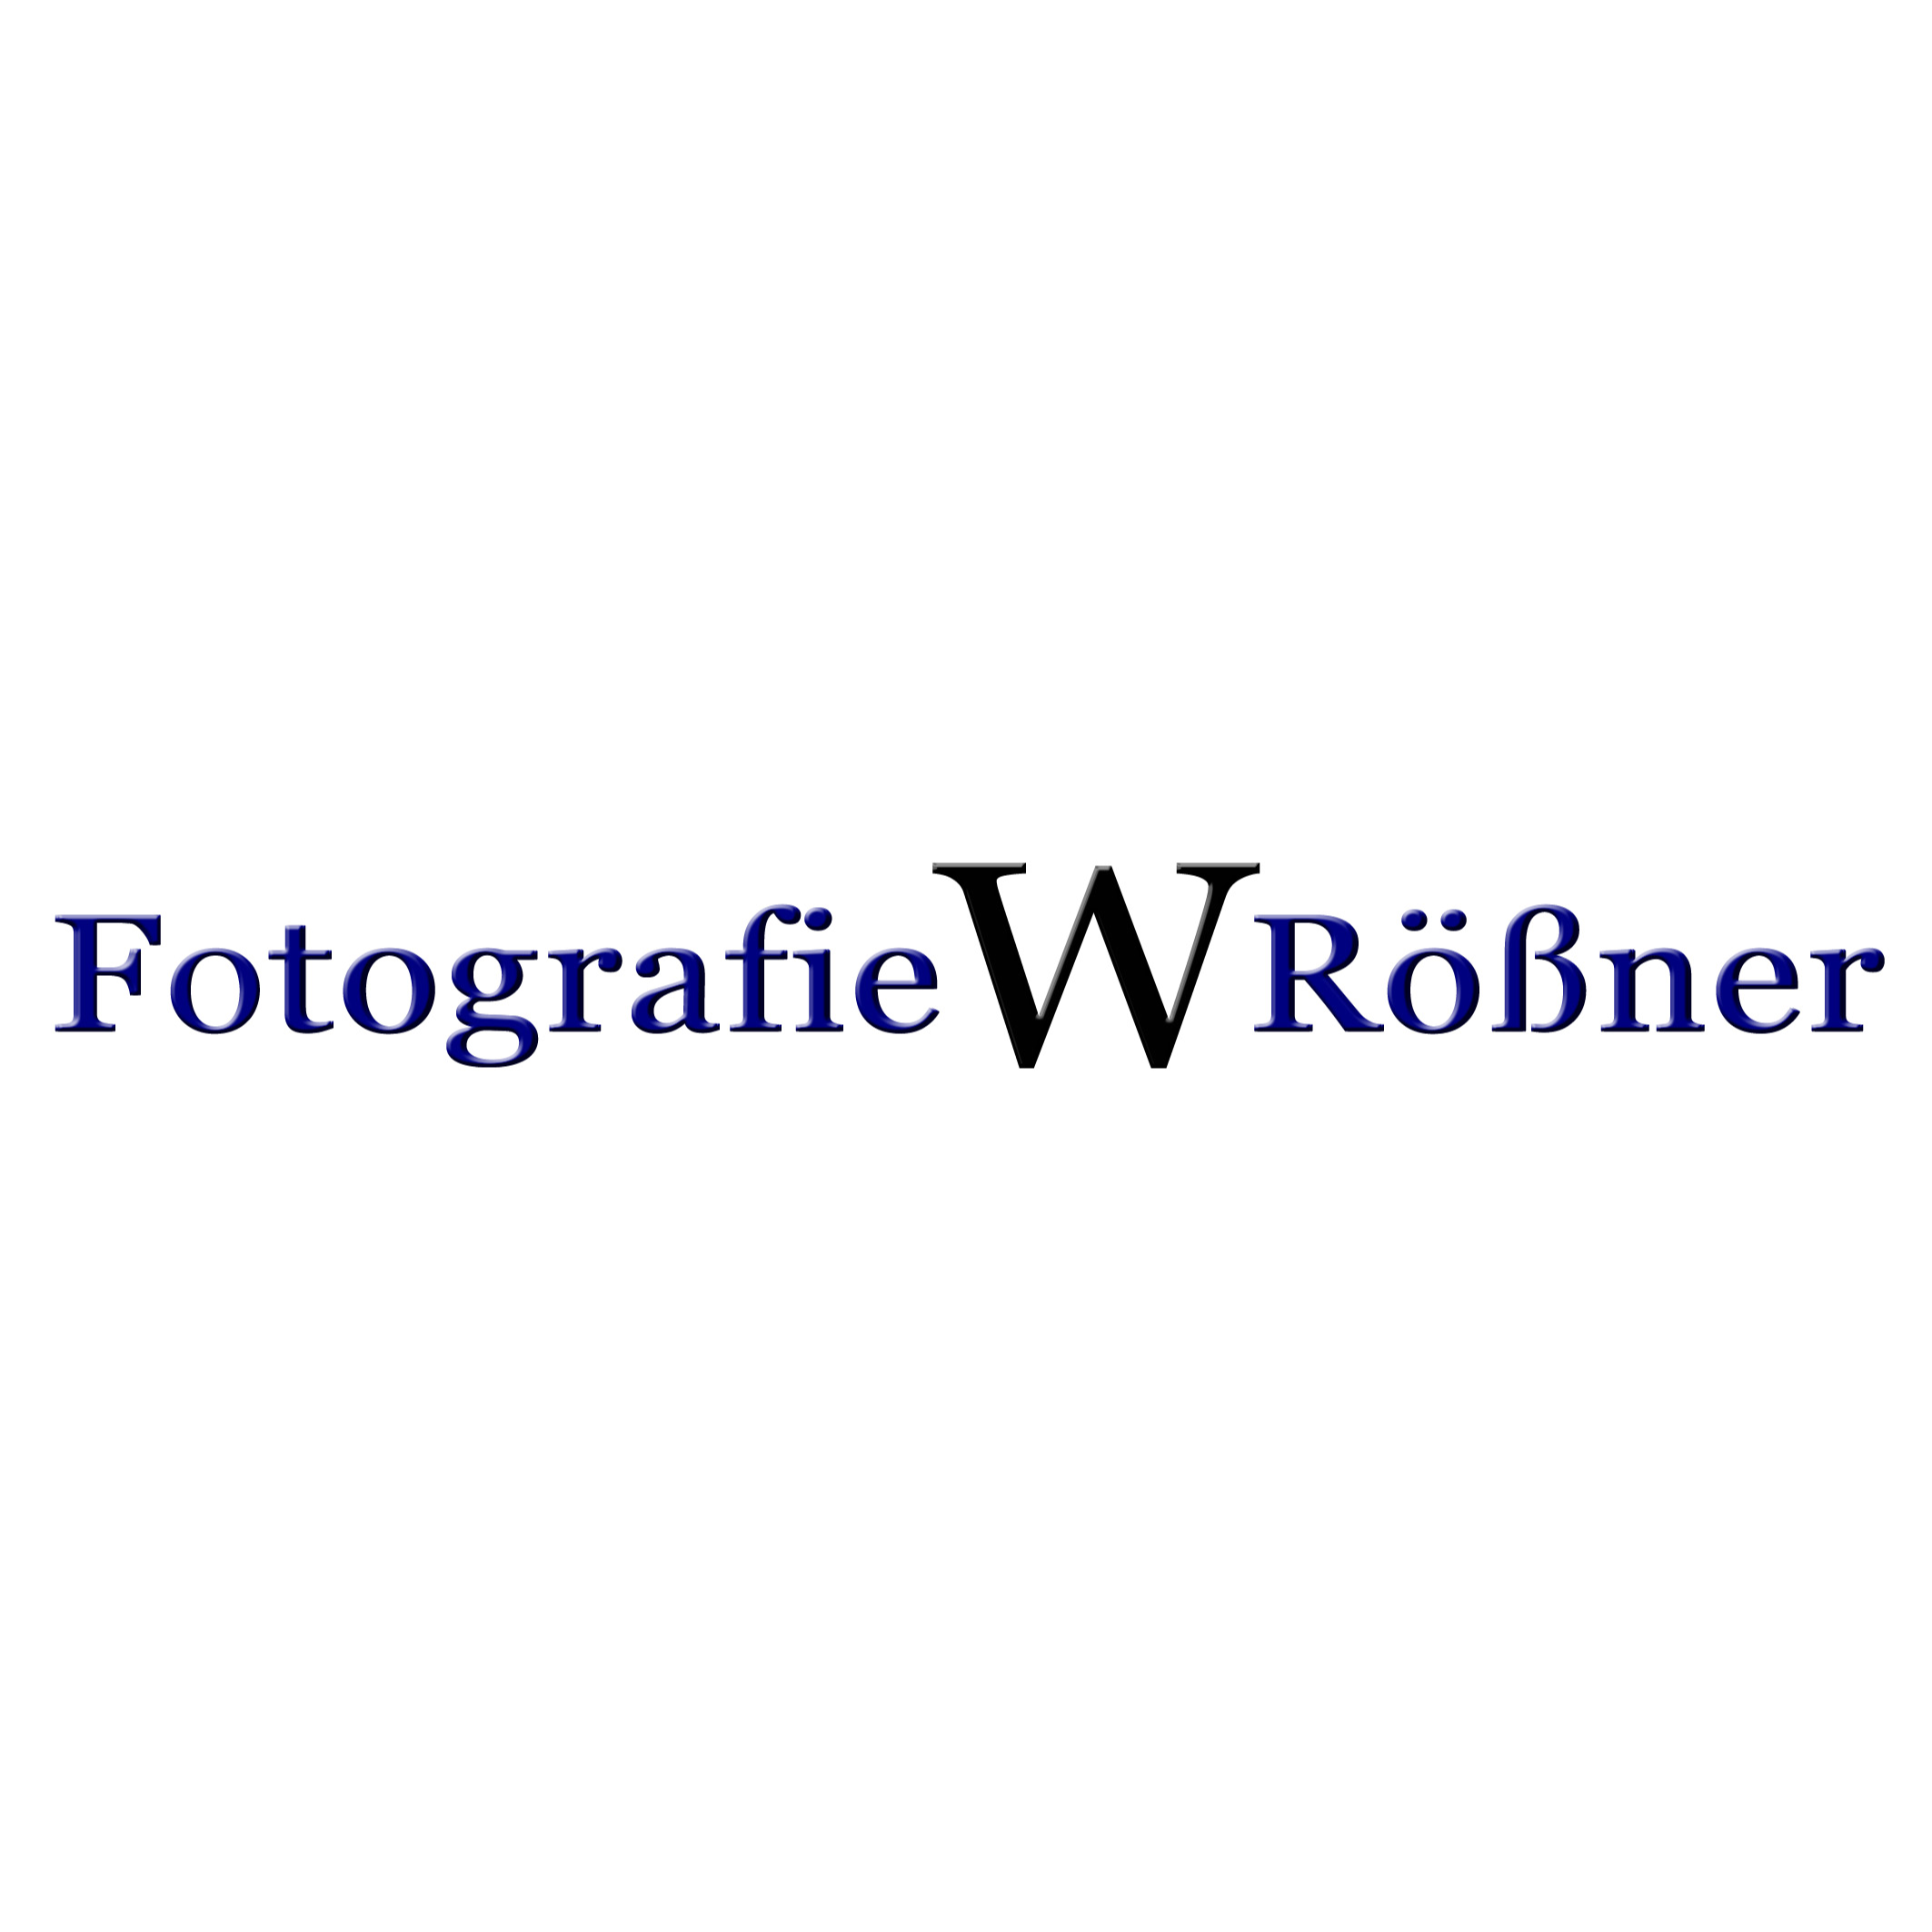 Fotografie W. Rößner Logo